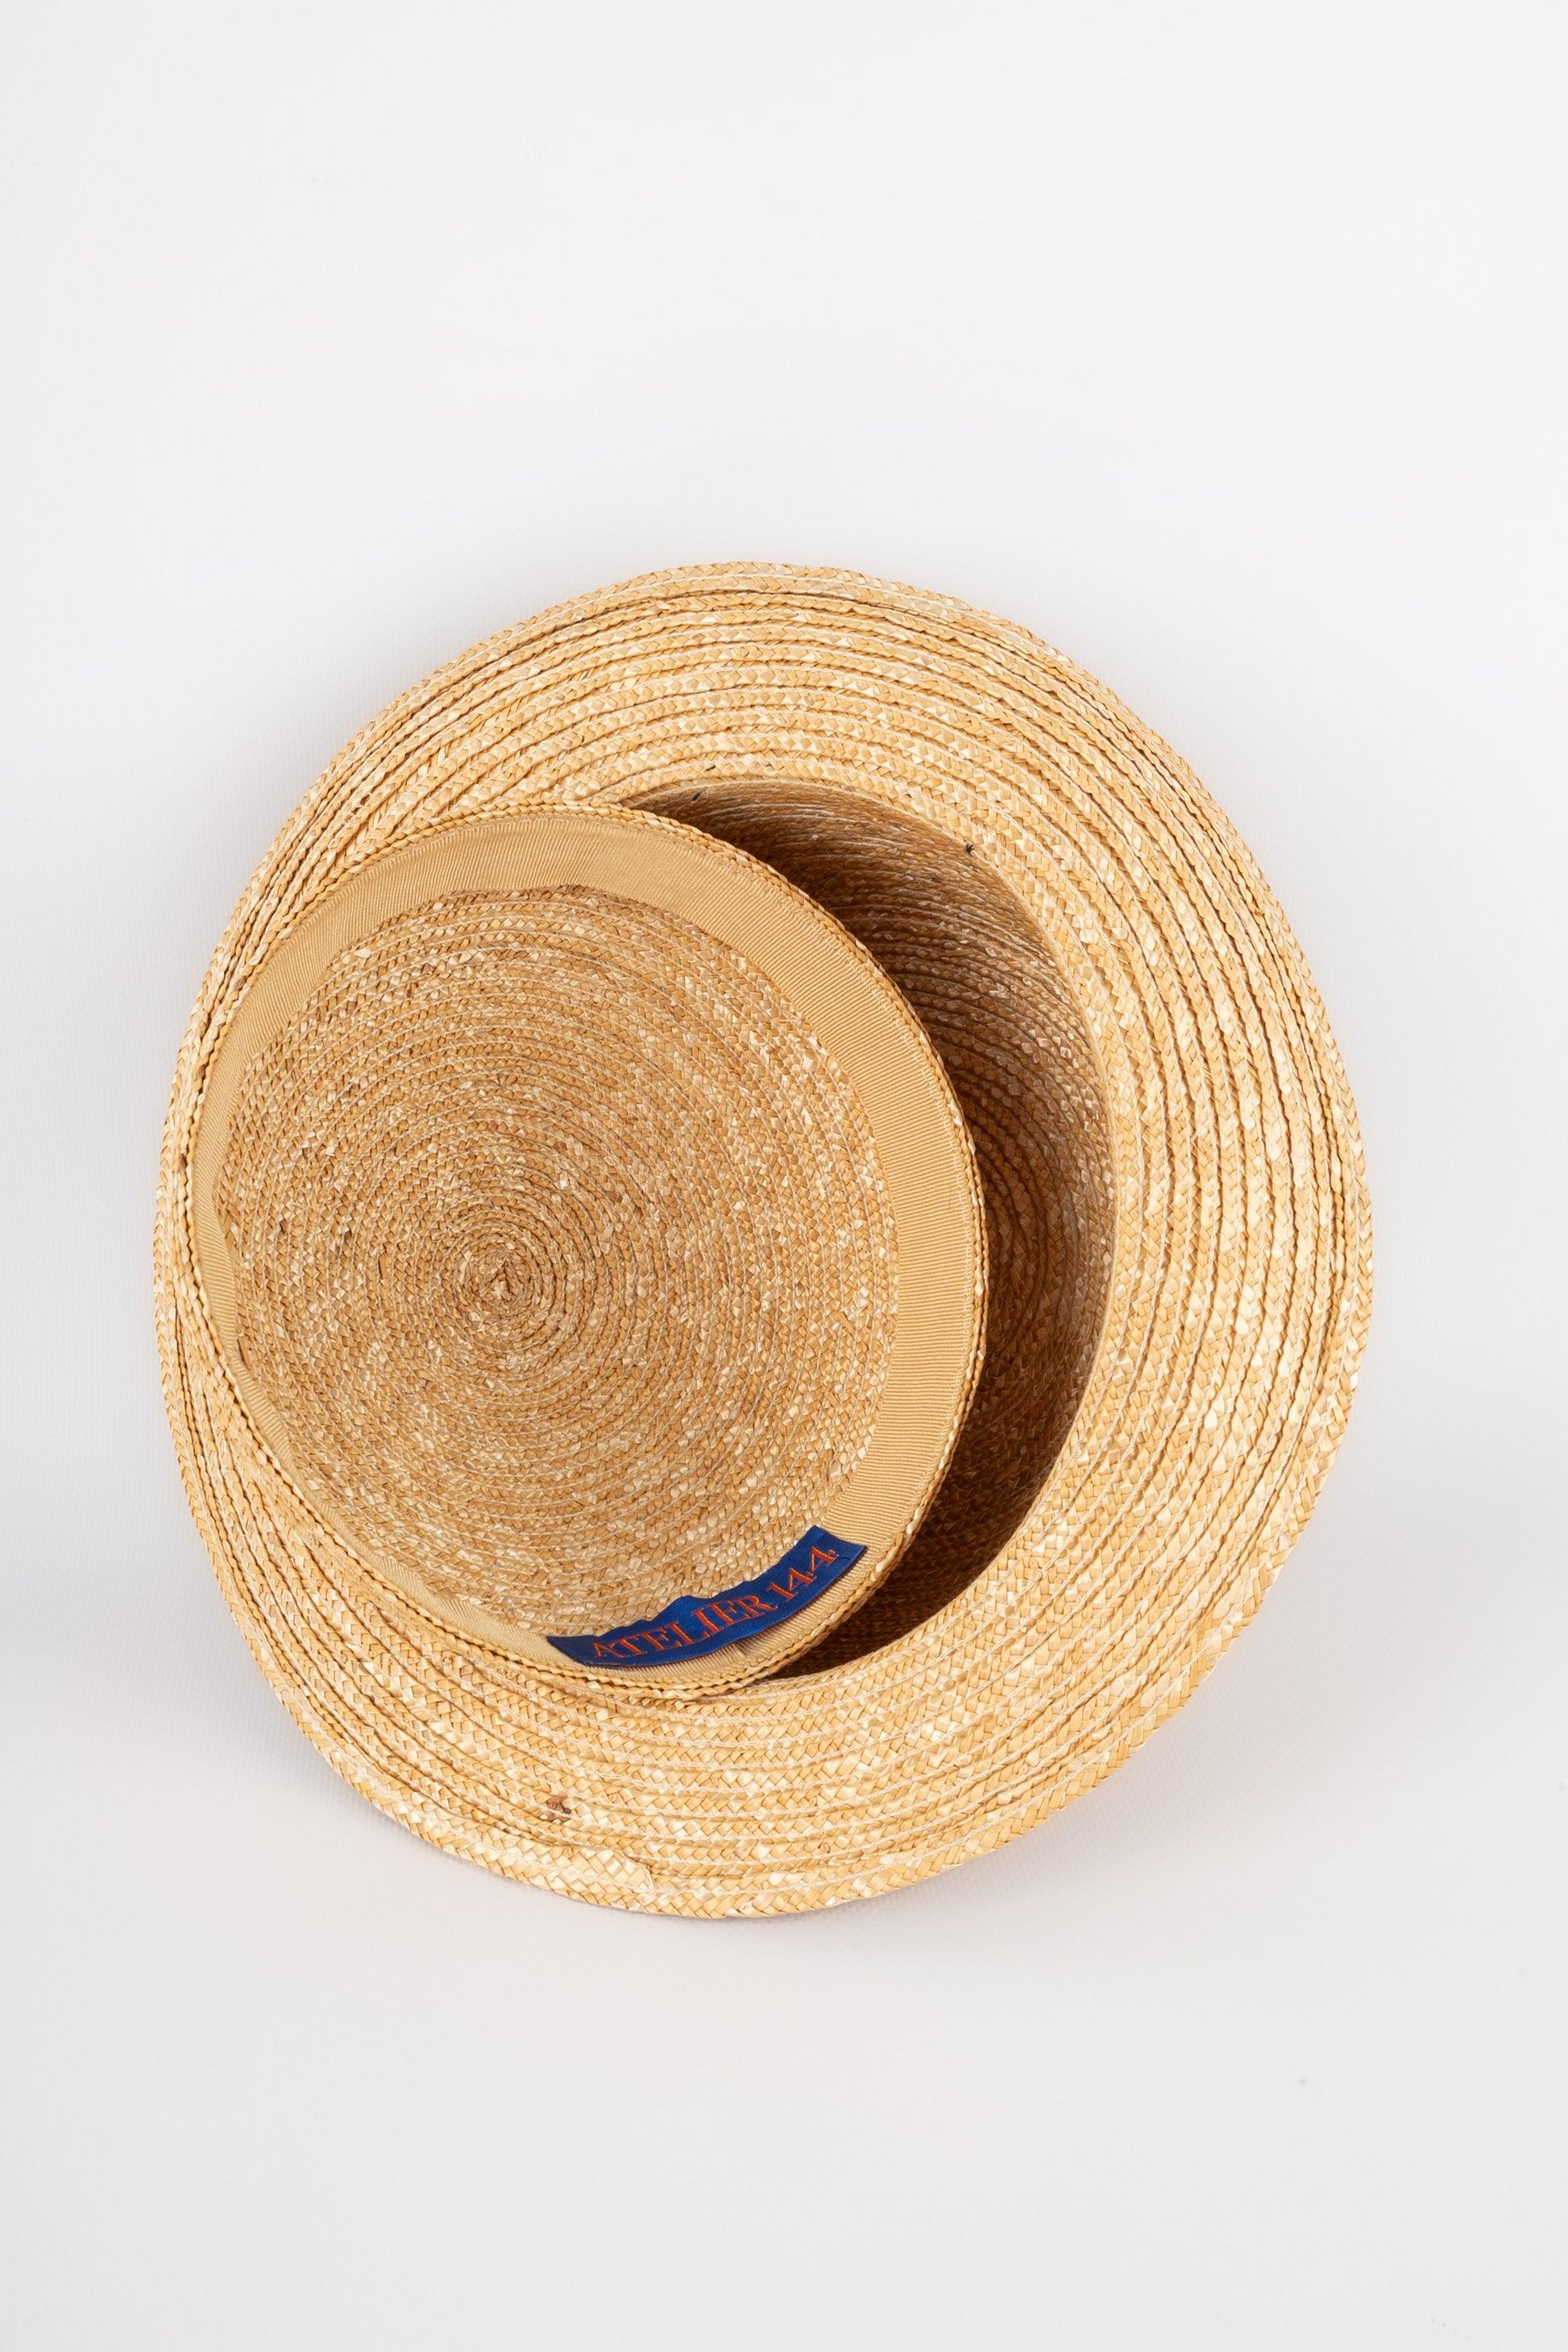 Atelier 144 Straw Asymmetrical Hat For Sale 2